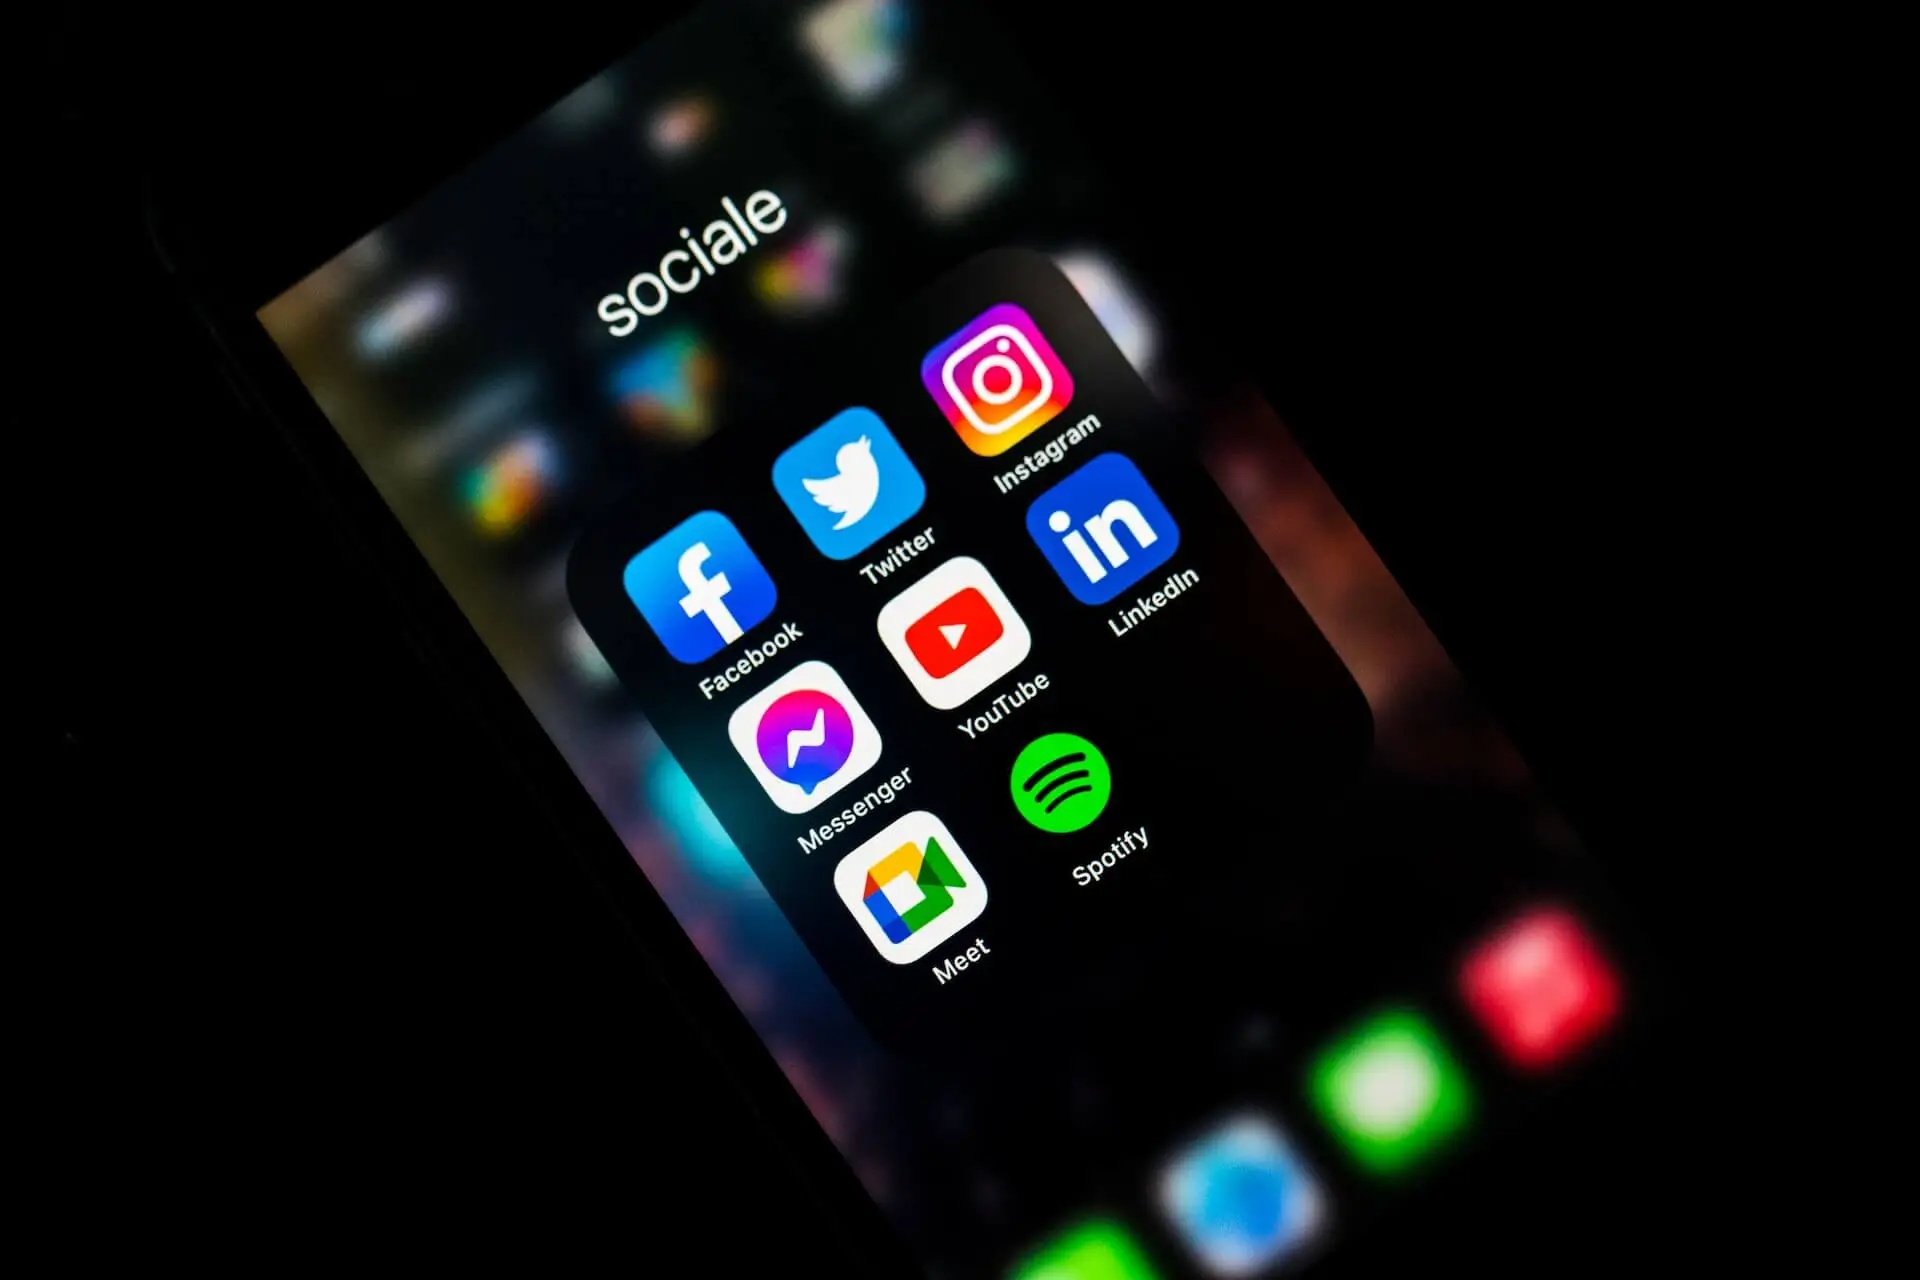 iPhone highlighting various social media apps and platform.